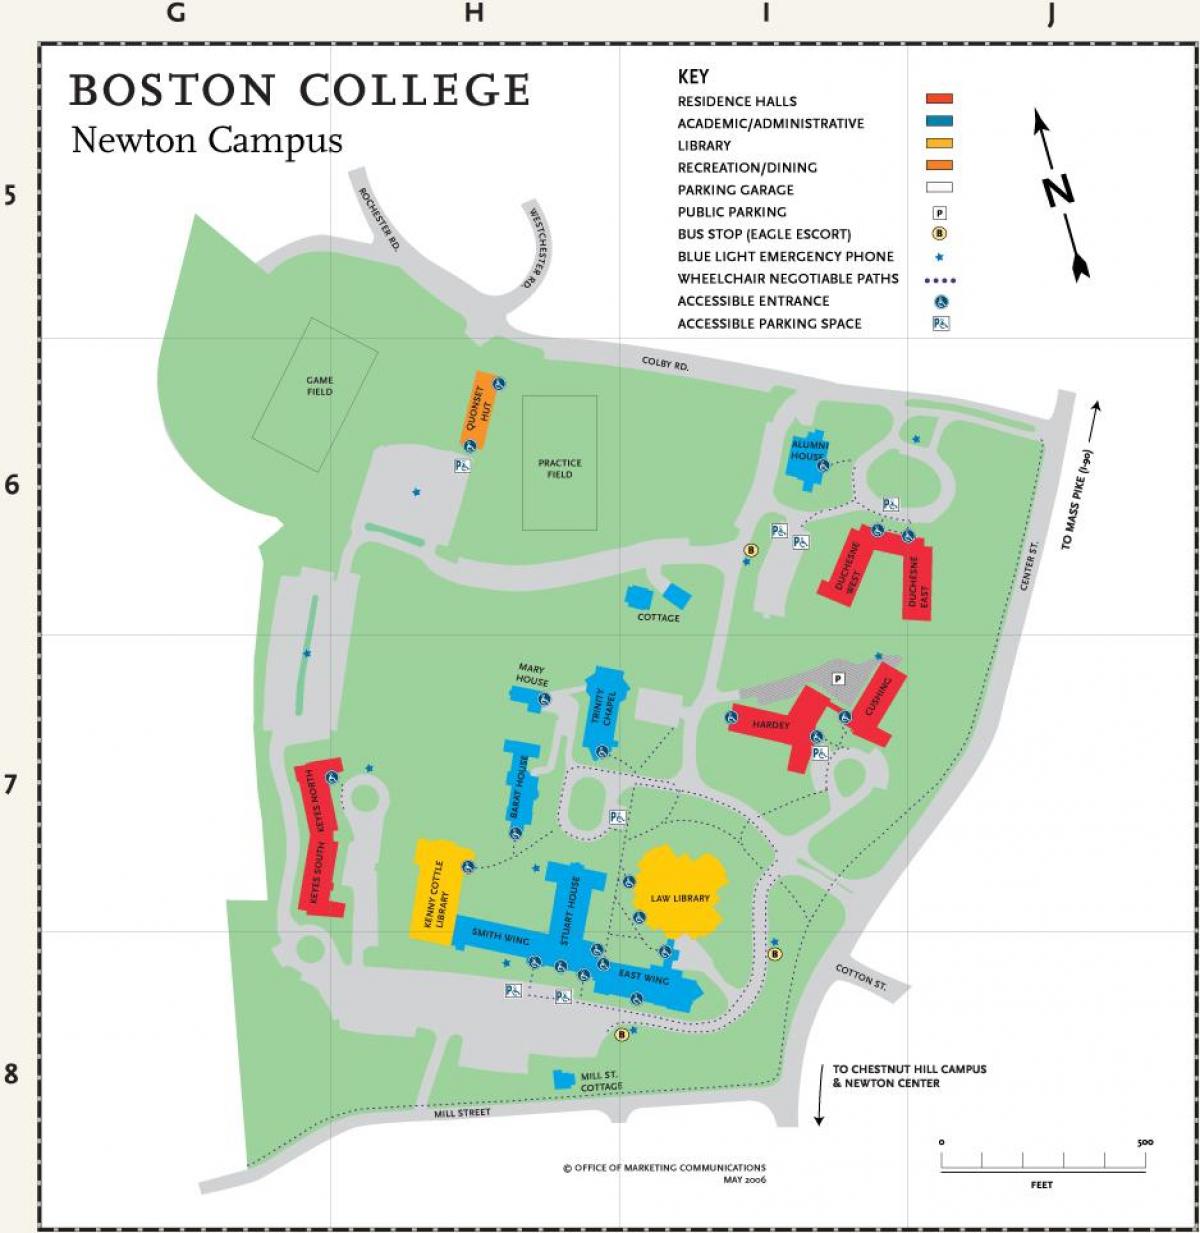 Boston college göster